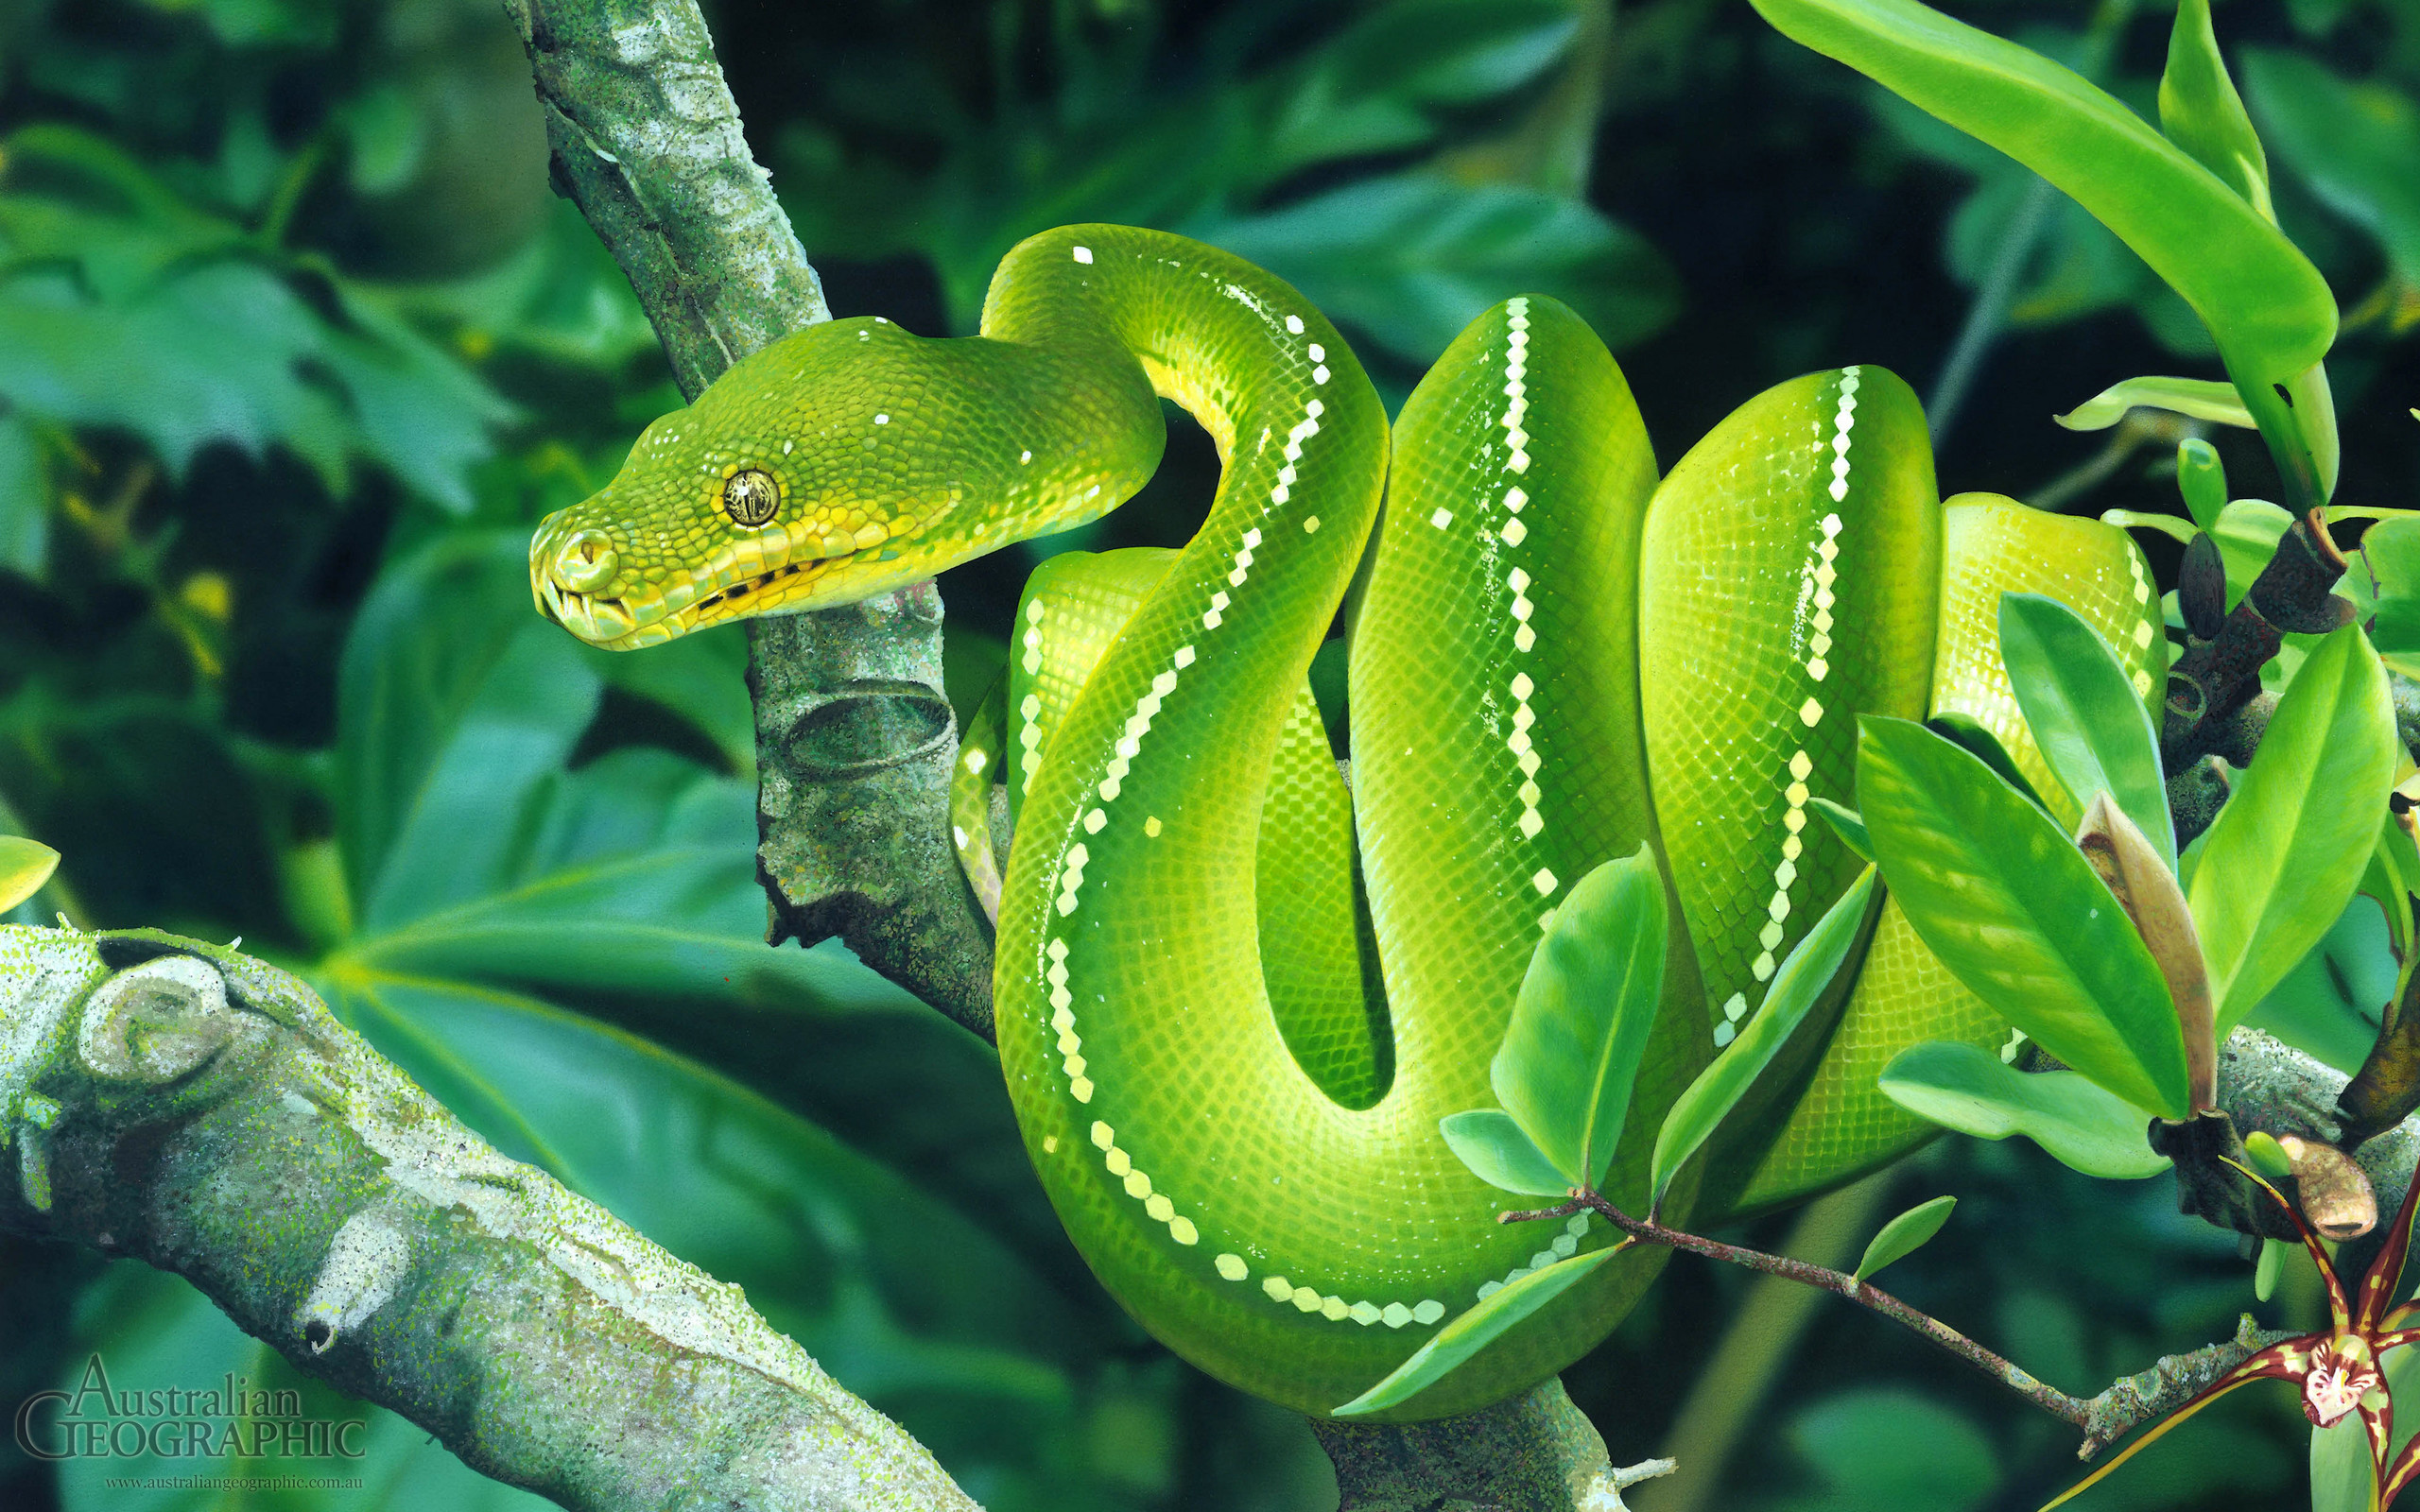 2560x1600 Images of Australia: Green tree snake, illustration